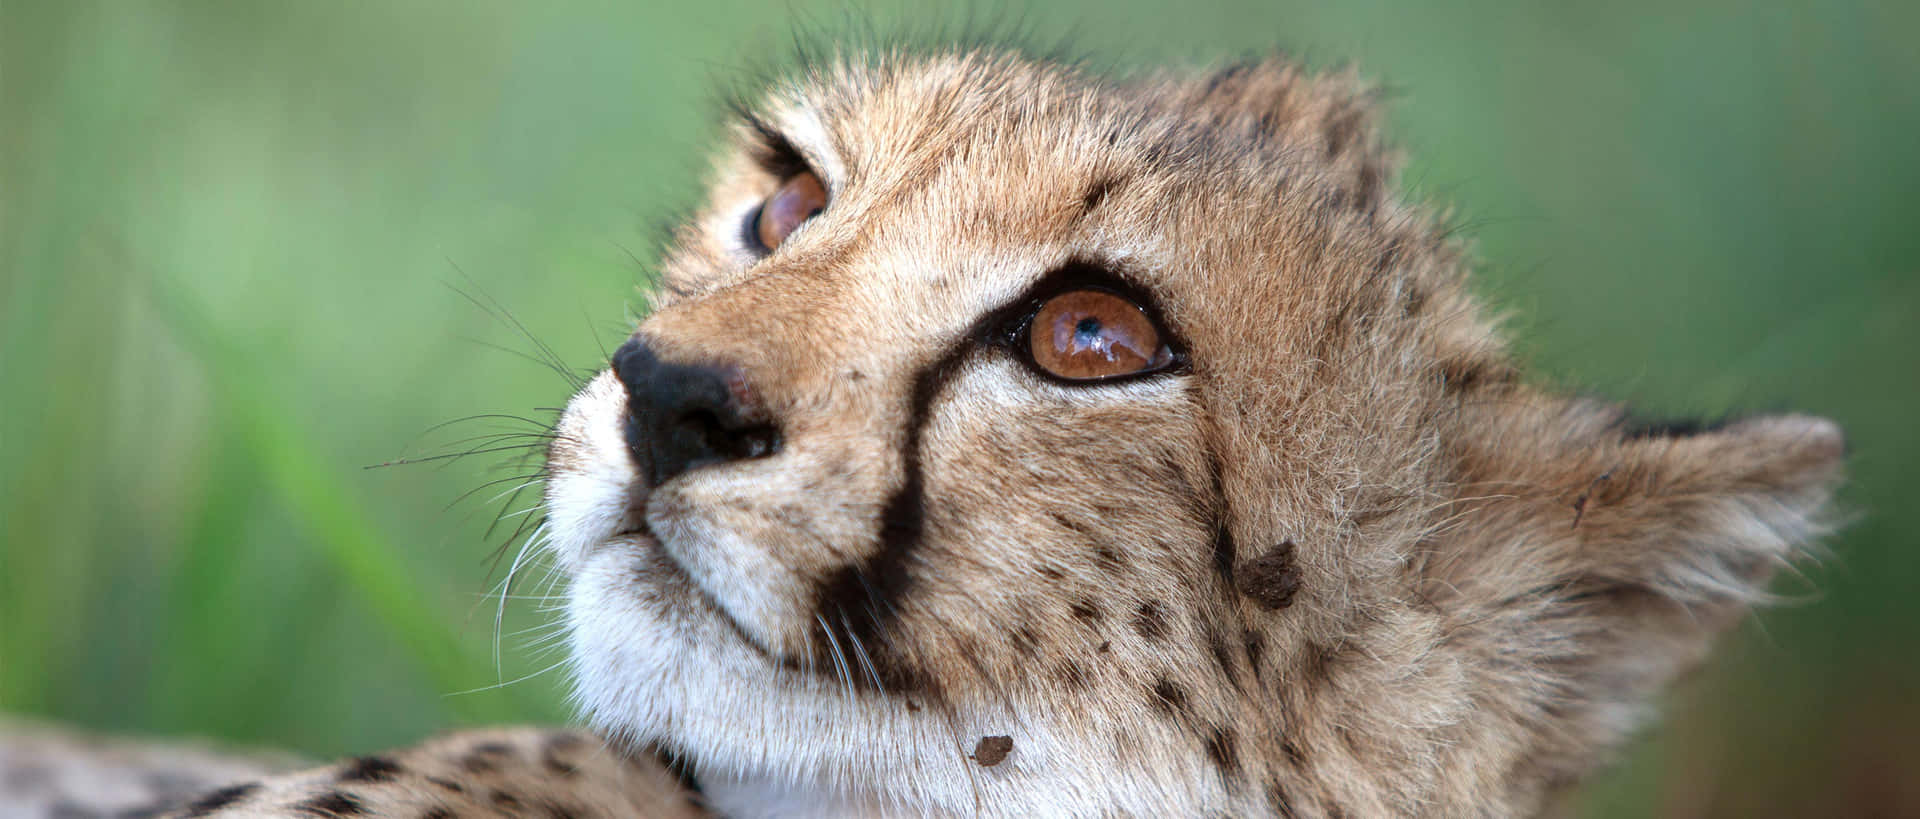 Imagemde Um Leopardo-safari, Animal Selvagem.